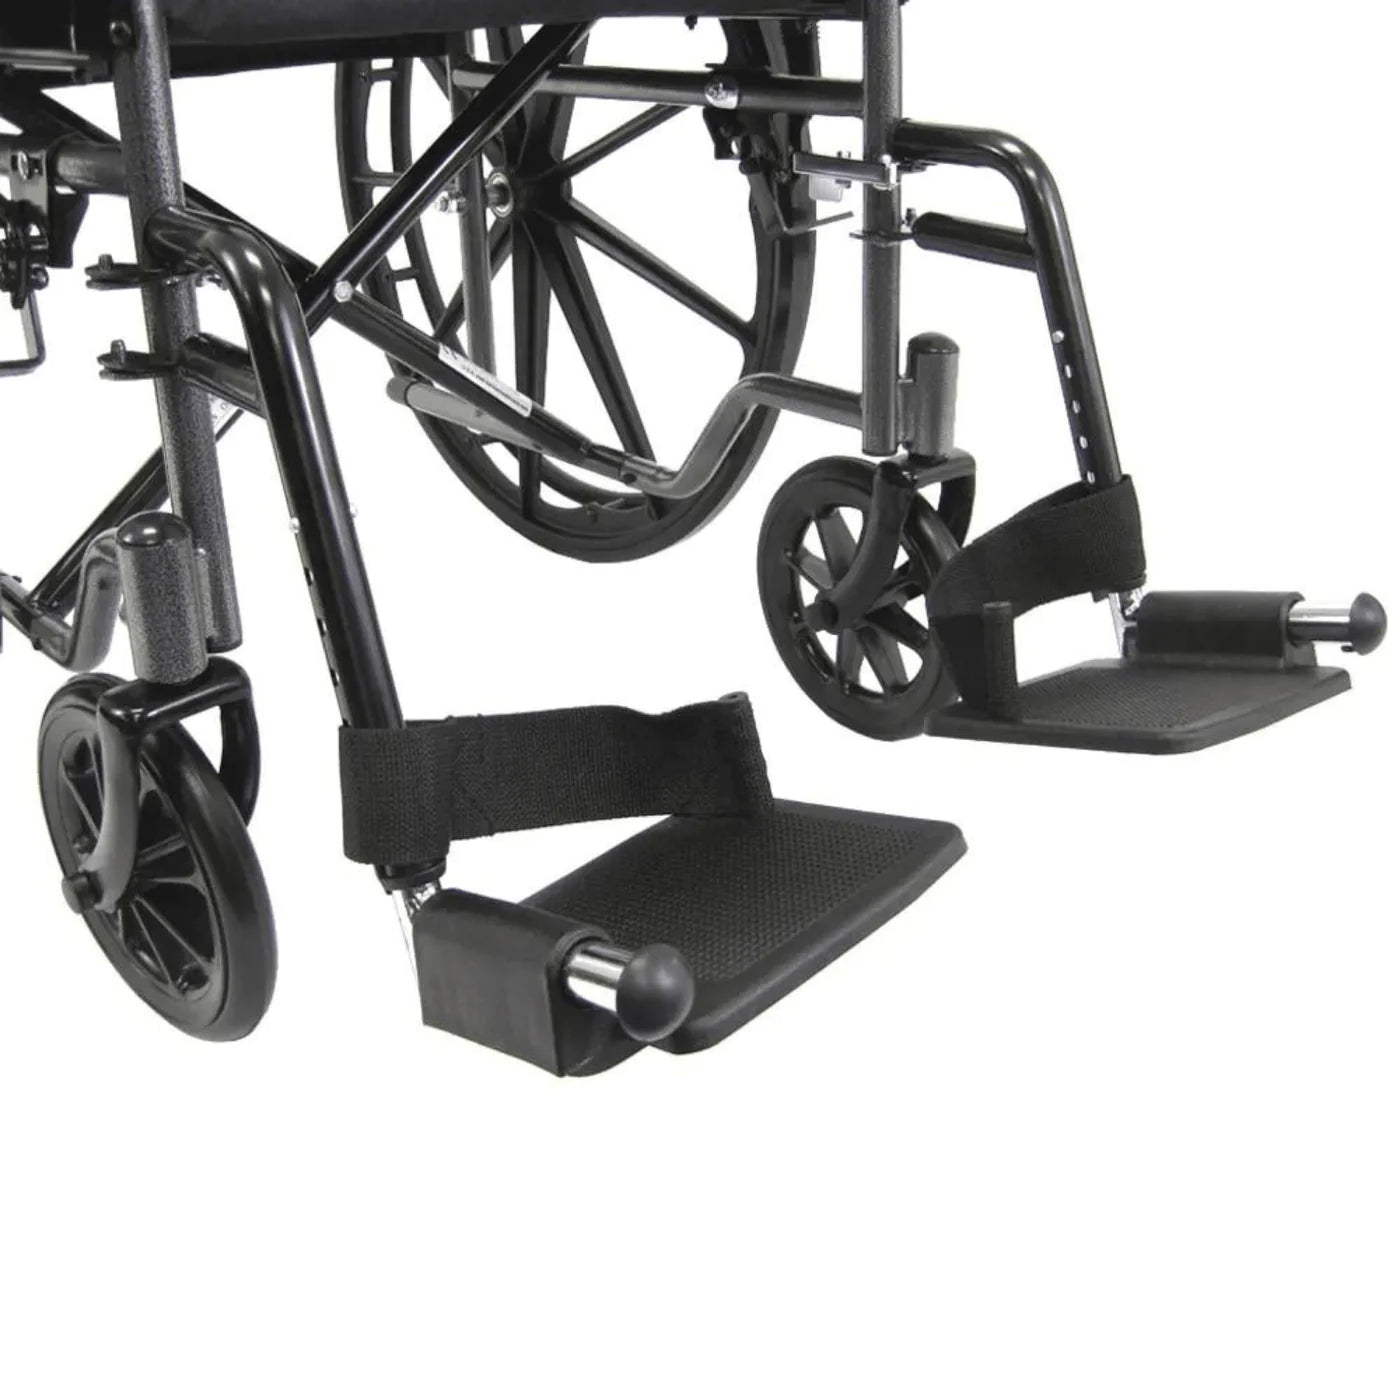 Karman KN-800T Steel Wheelchair with Fixed Armrest 18" Seat Standard Wheelchairs Karman Healthcare   